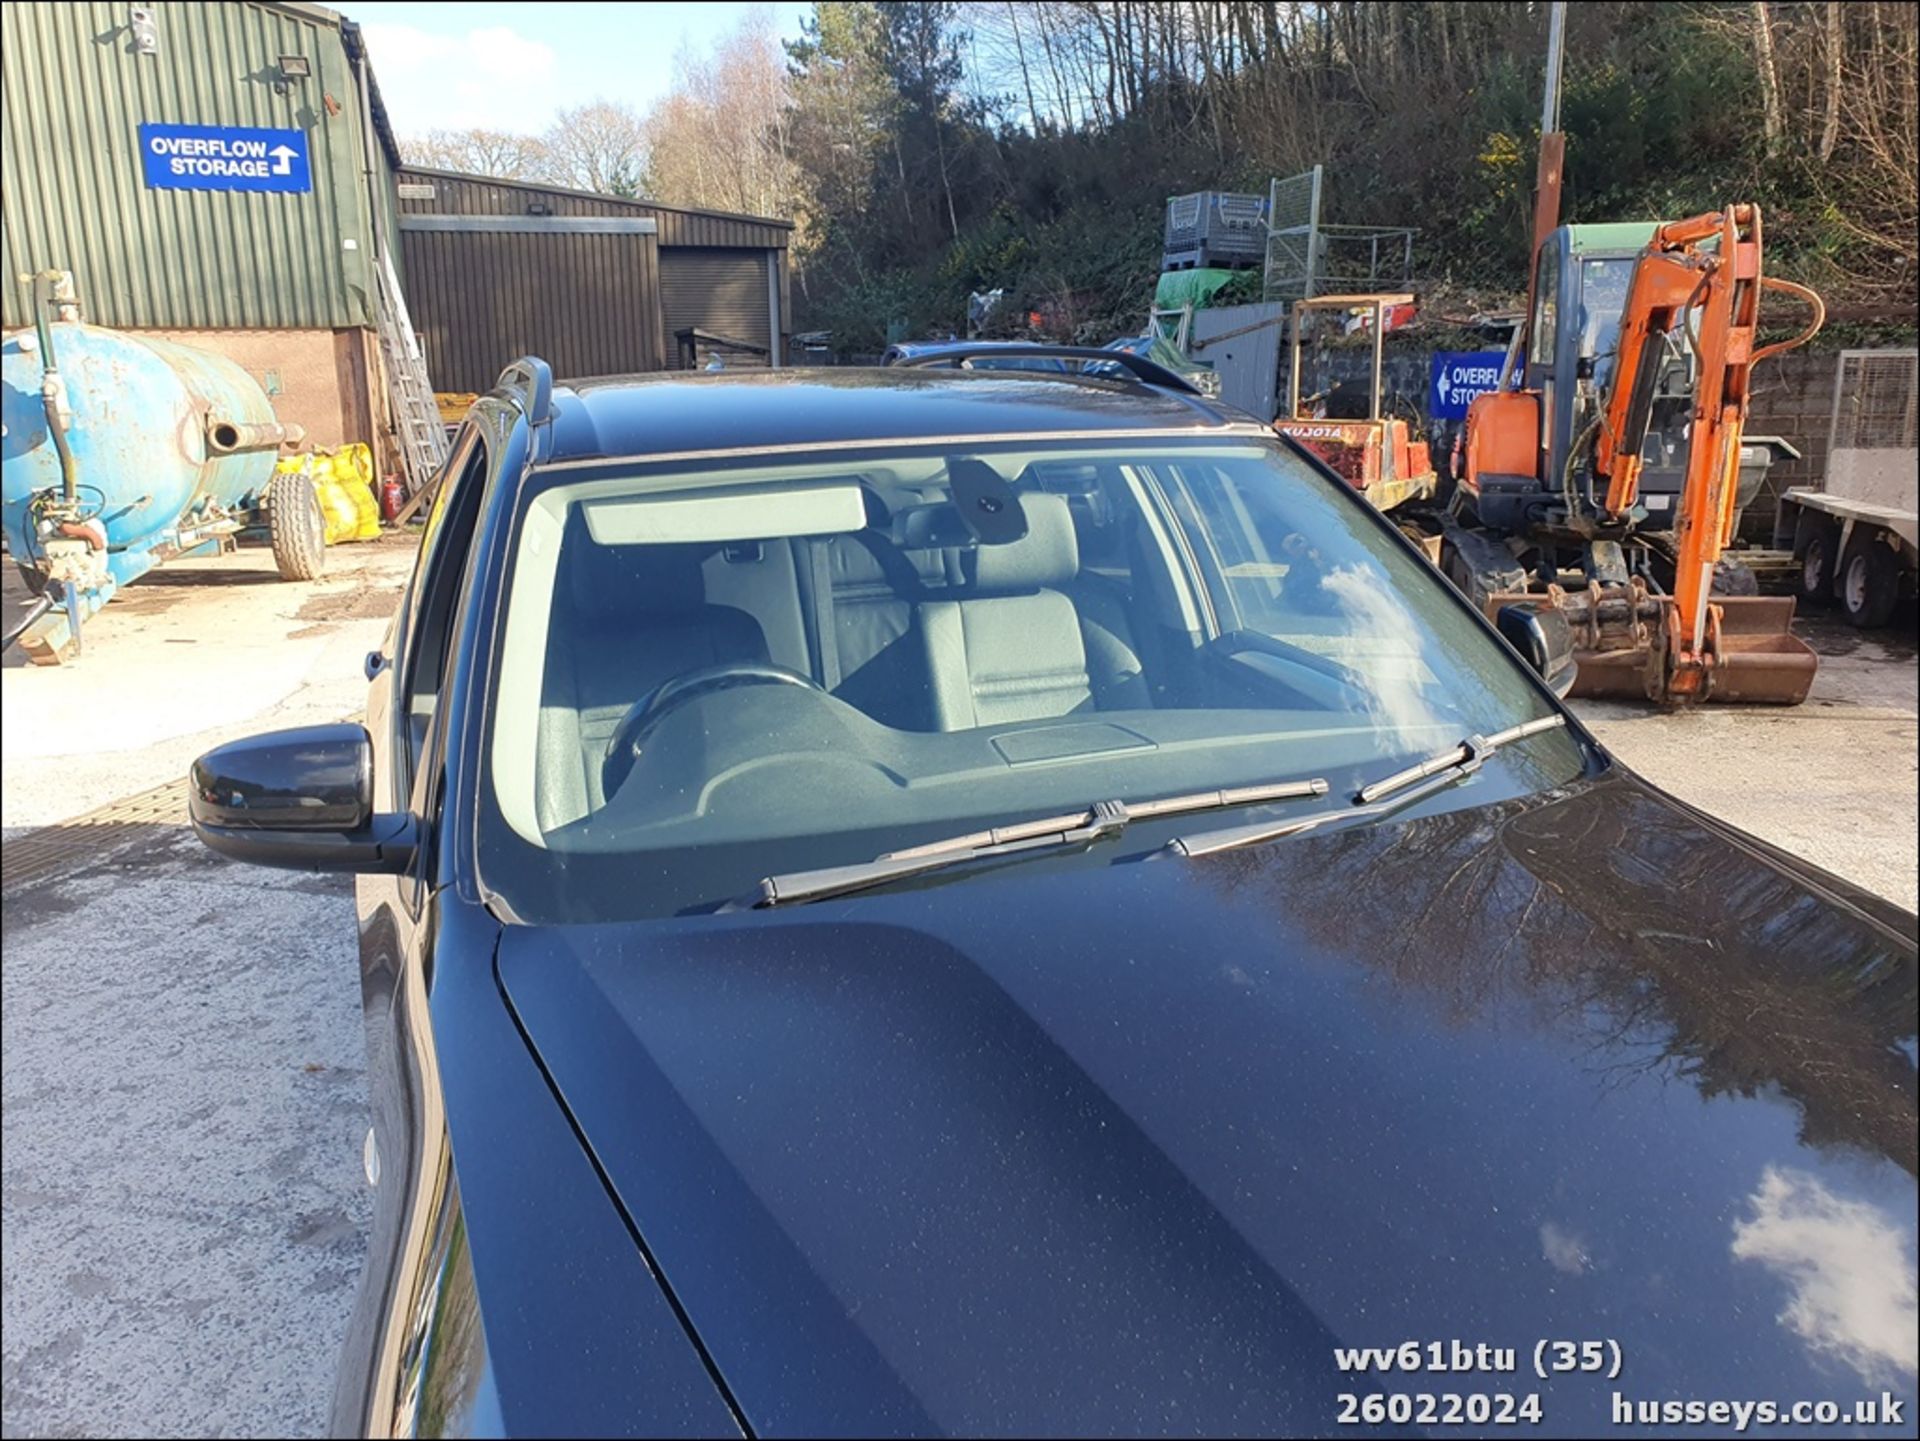 11/61 BMW X5 XDRIVE30D SE AUTO - 2993cc 5dr Estate (Black, 85k) - Image 36 of 51